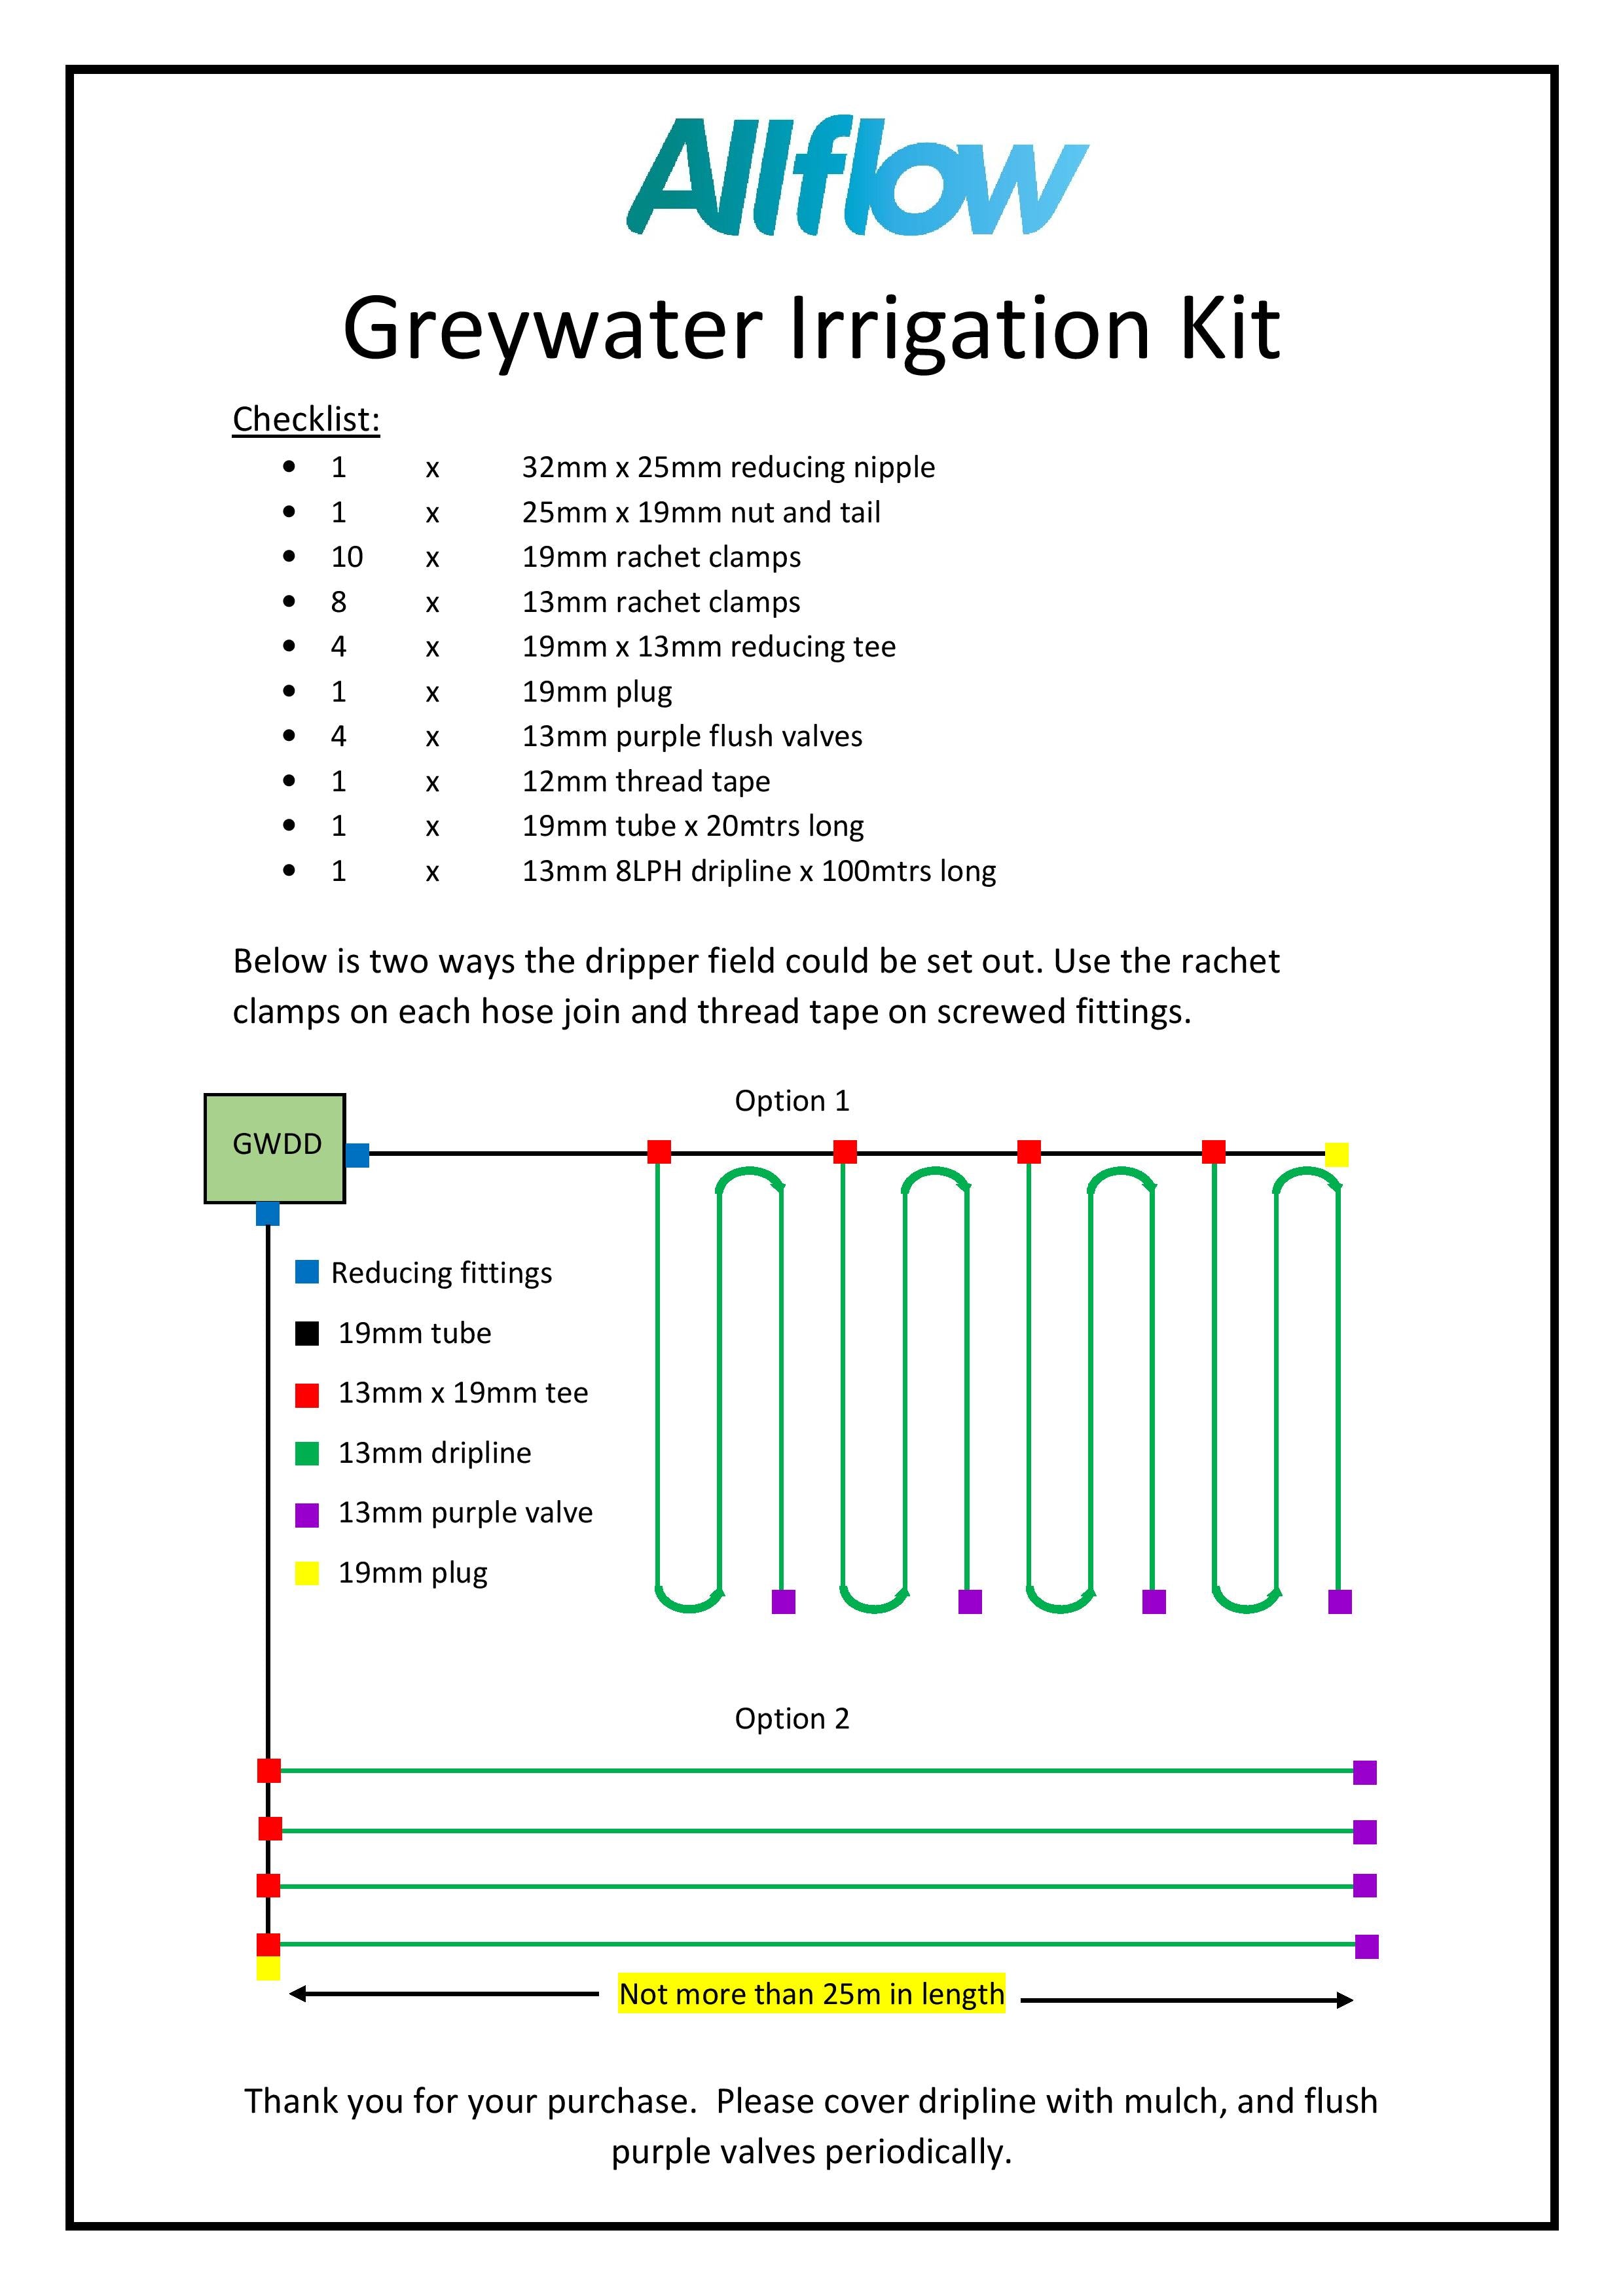 WaterMate Greywater Irrigation Kit details